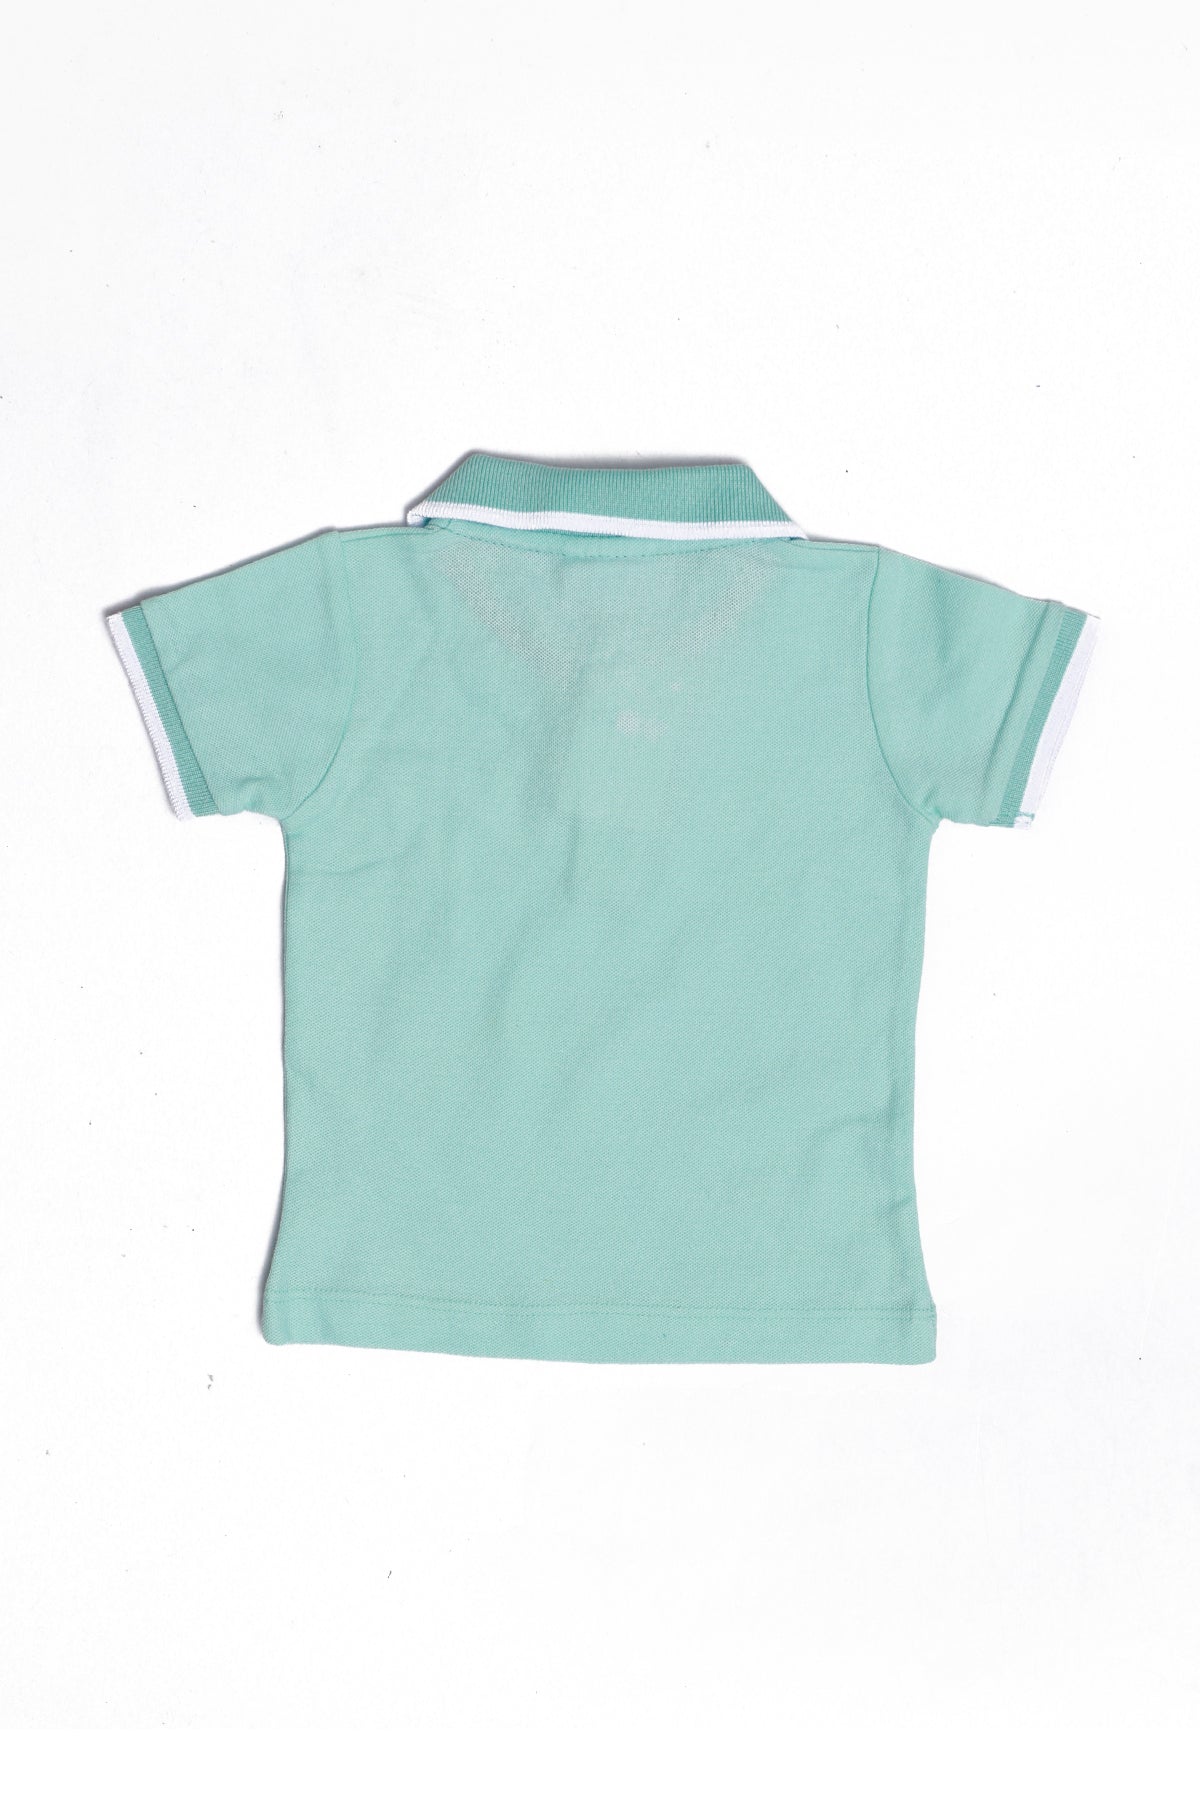 Ozone Baby Boys Short Sleeve Casual Polo T-Shirt